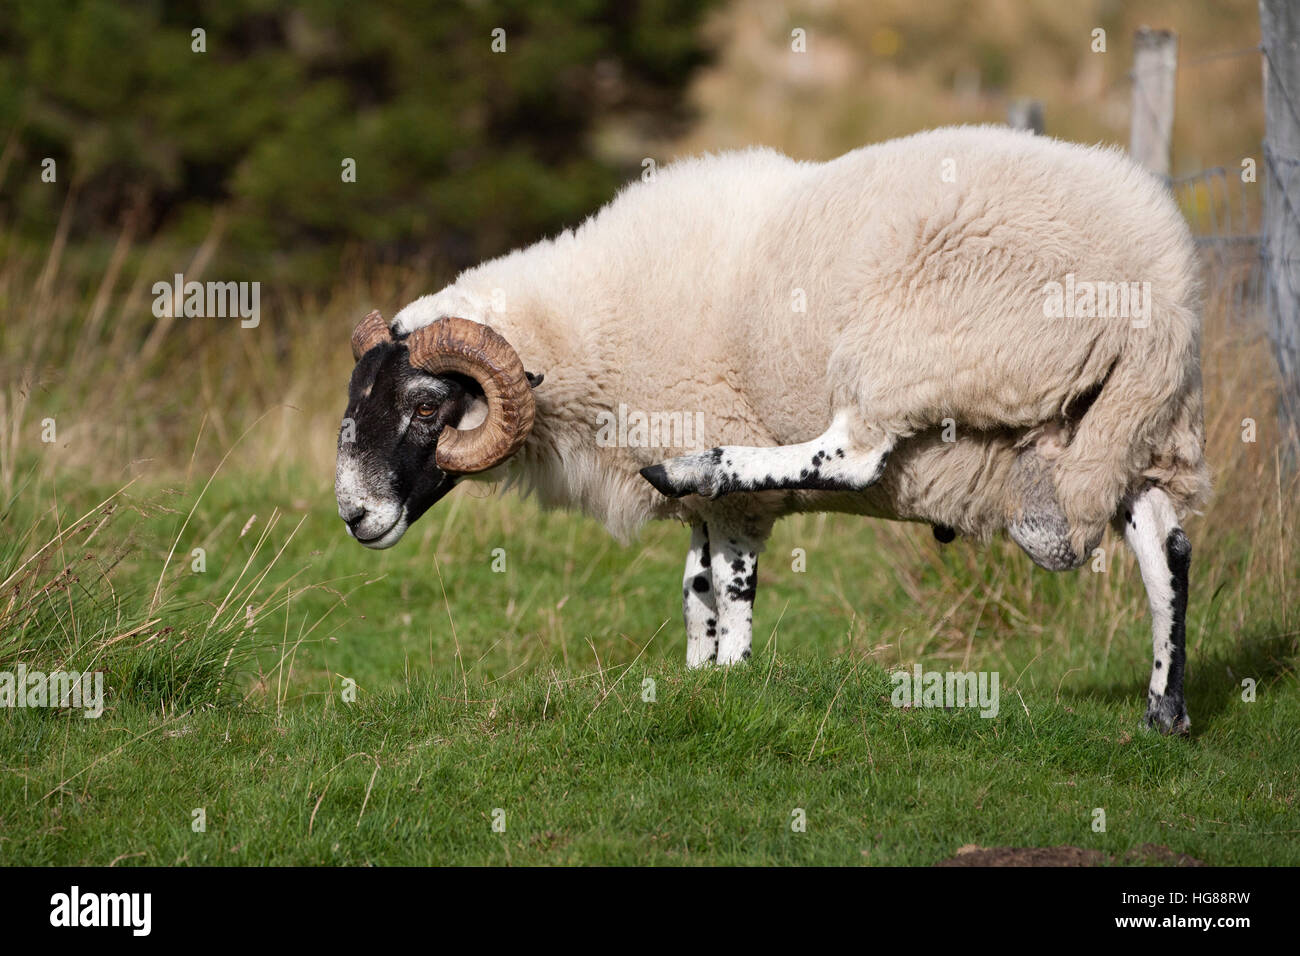 Ram, male sheep